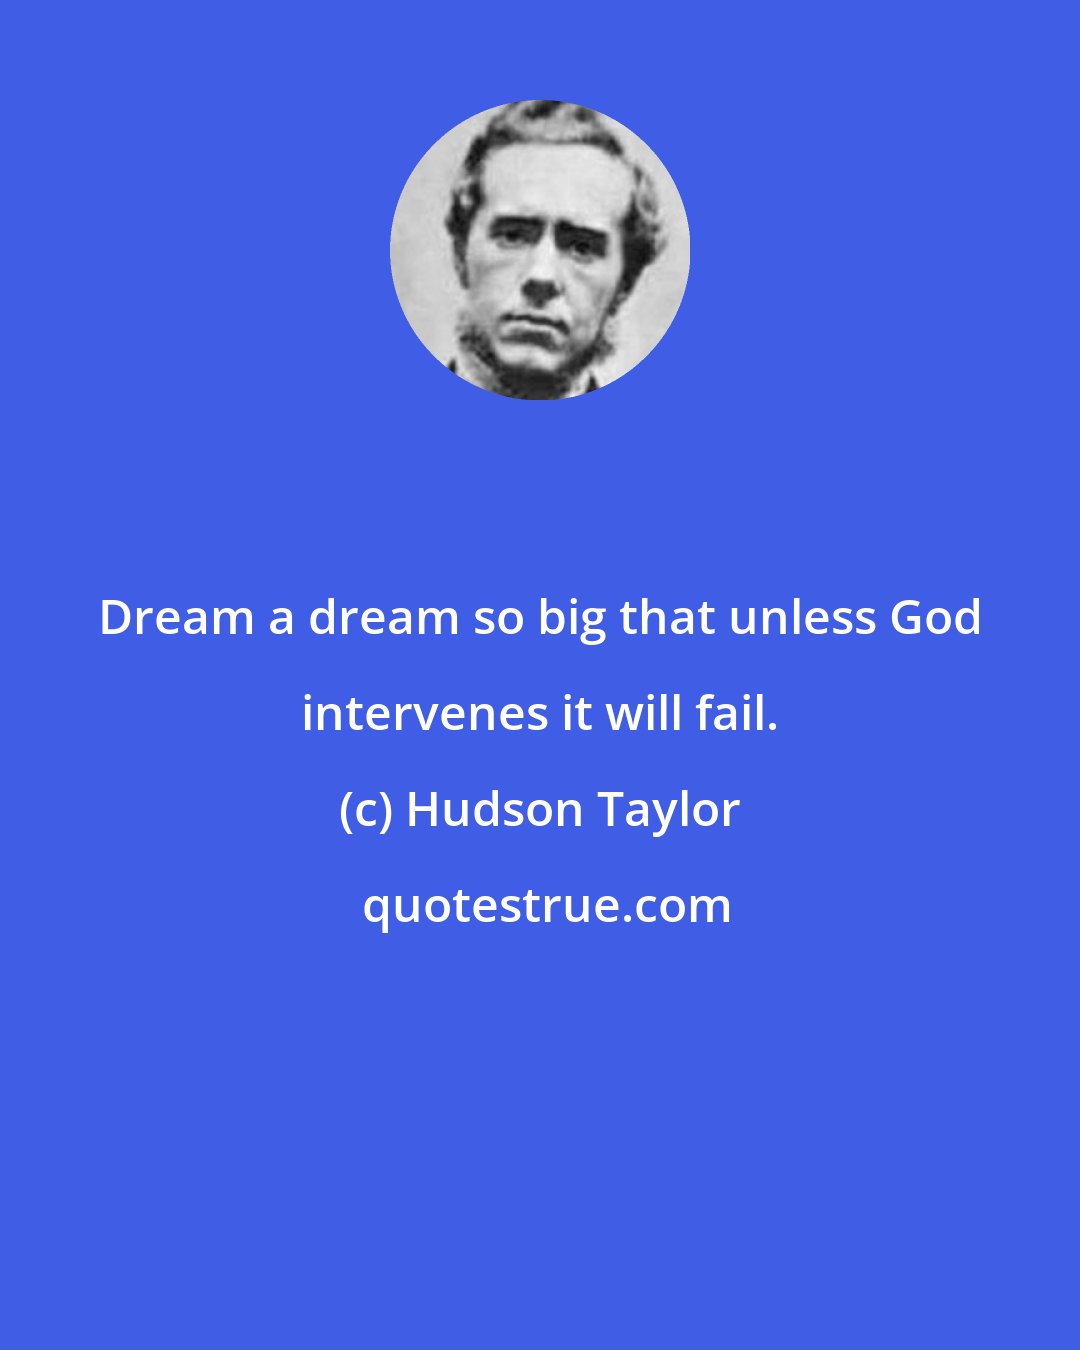 Hudson Taylor: Dream a dream so big that unless God intervenes it will fail.